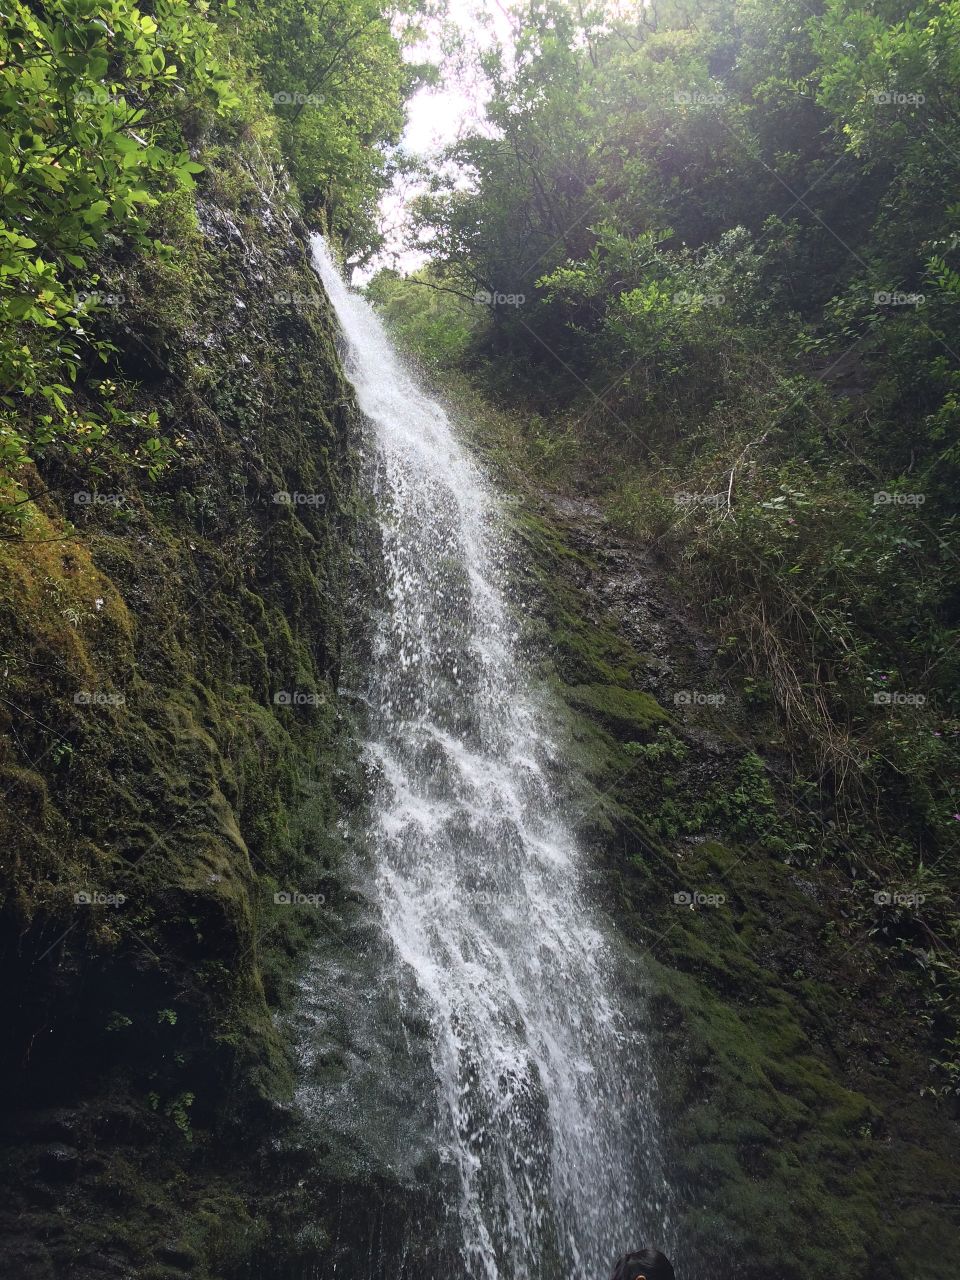 Waterfall3